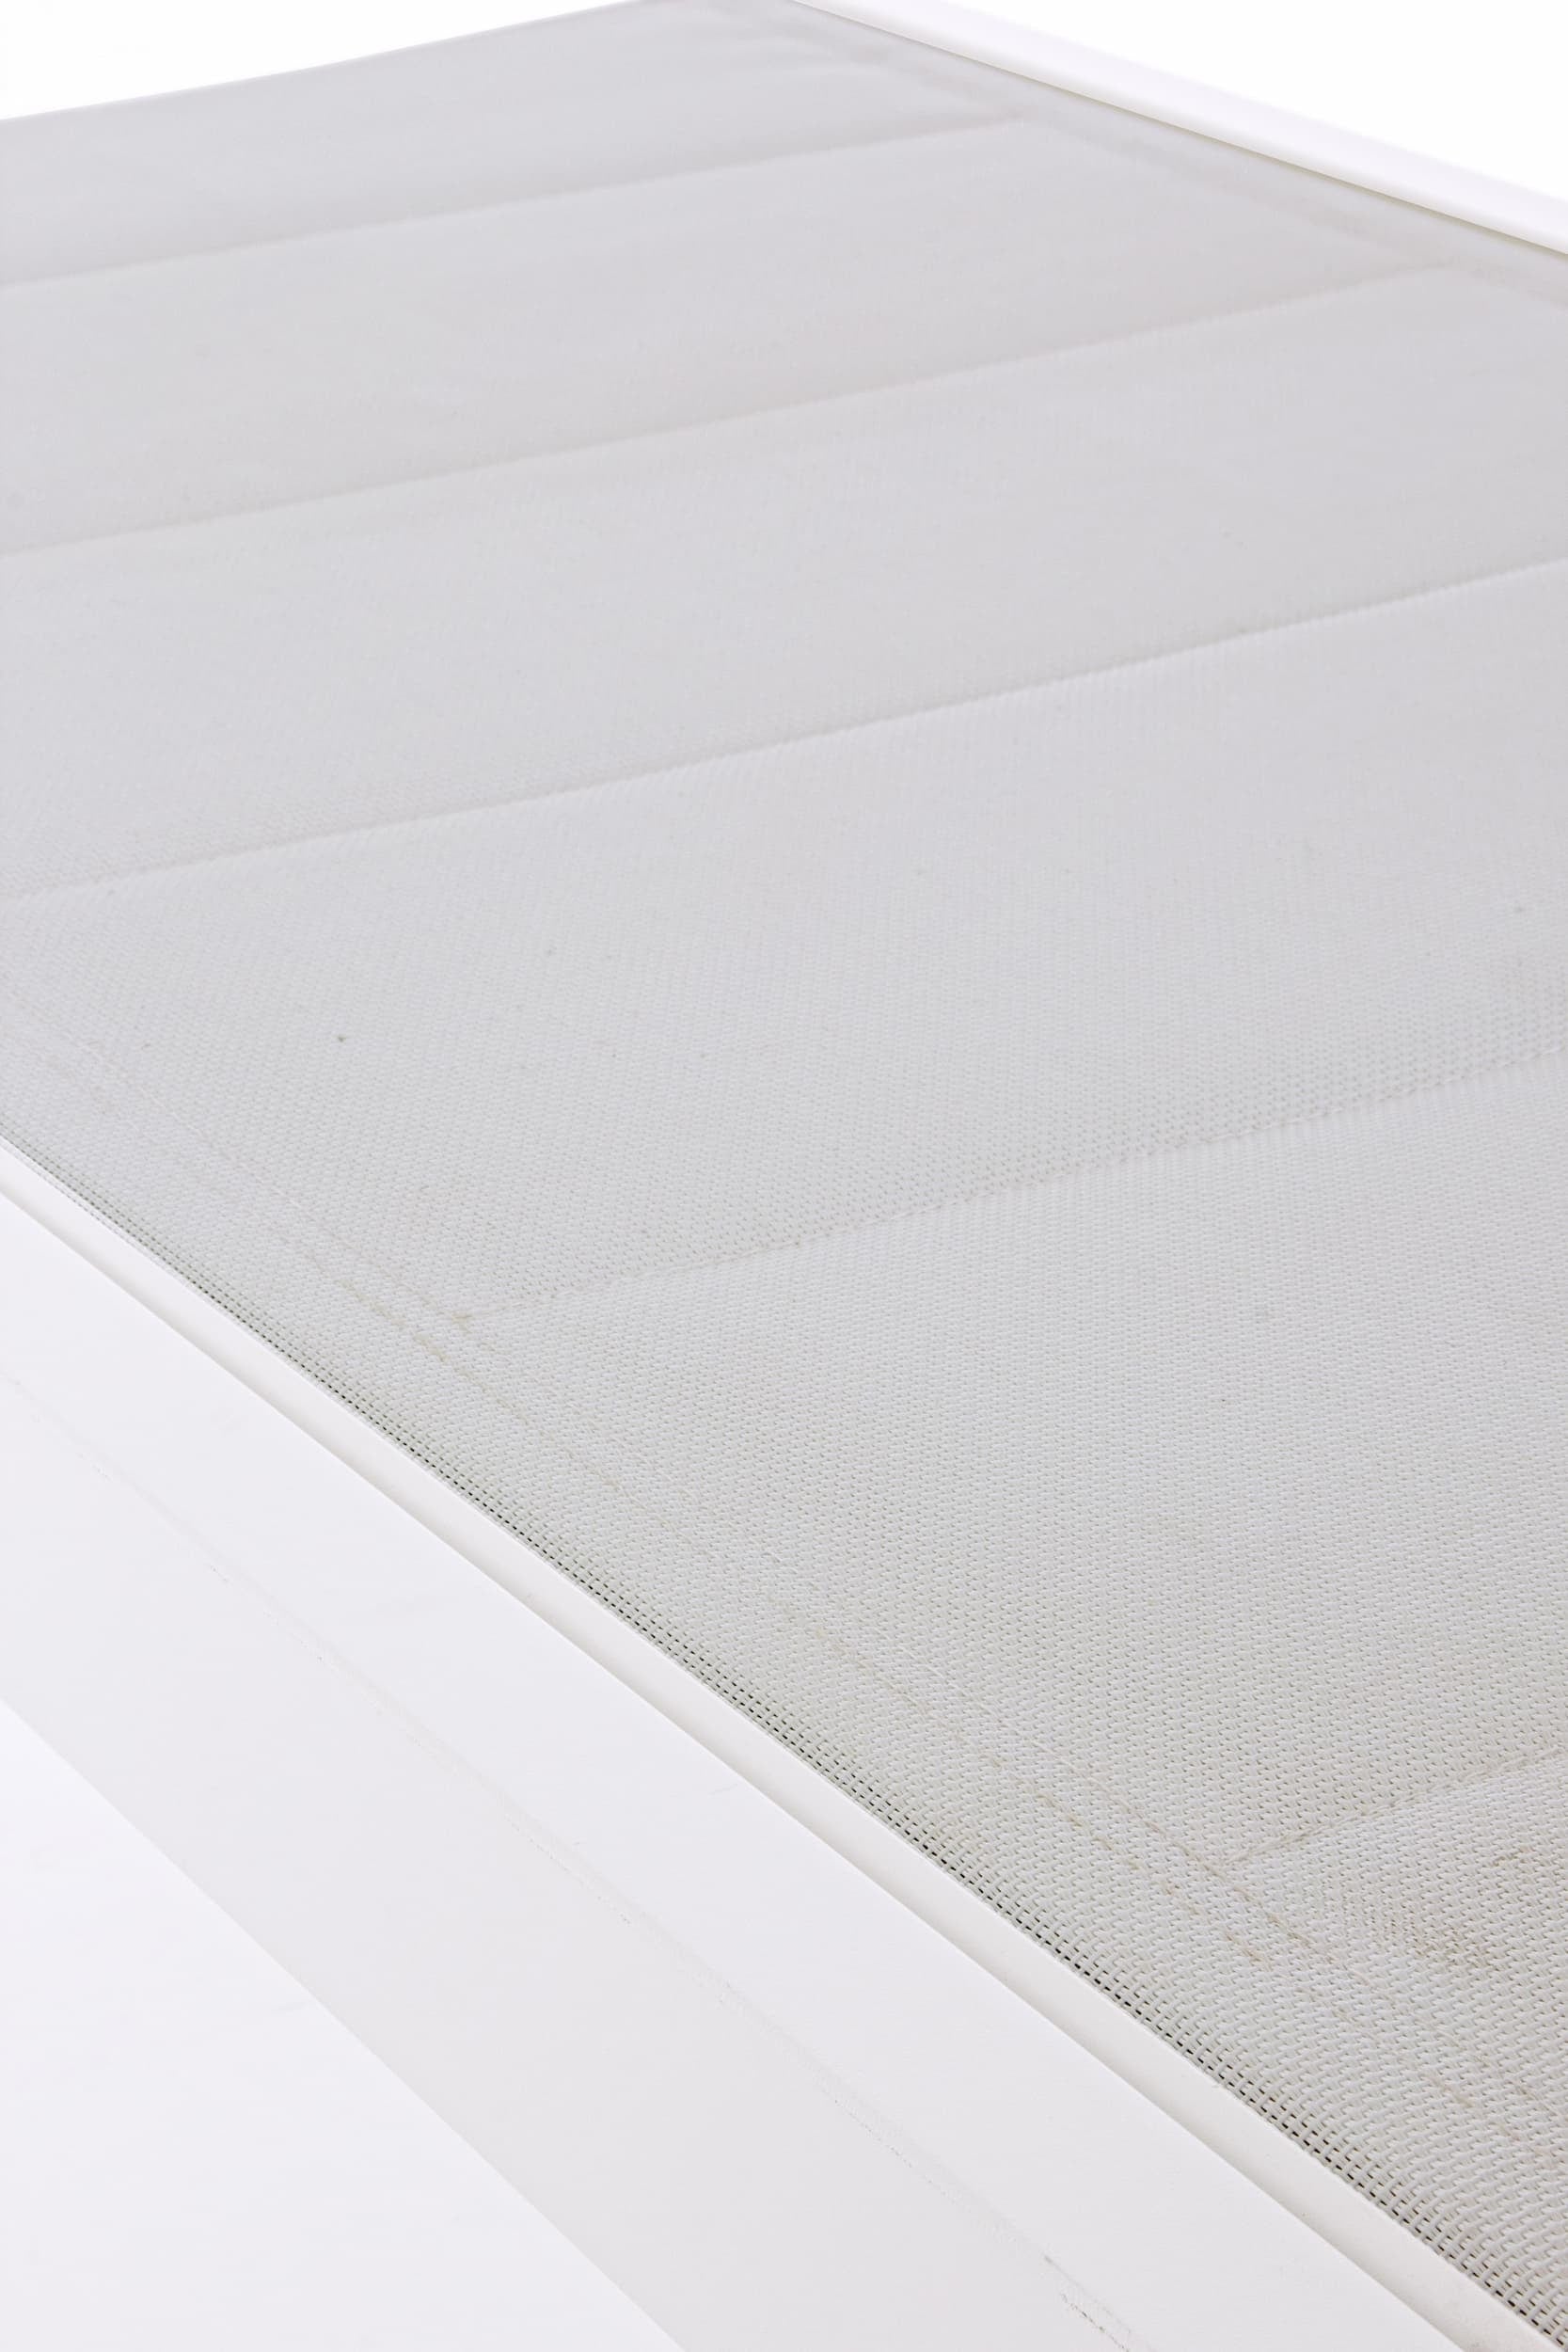 Sezlong pentru gradina / terasa, din aluminiu si material textil, Hilde High Gri / Alb, l65xA200xH102 cm (4)